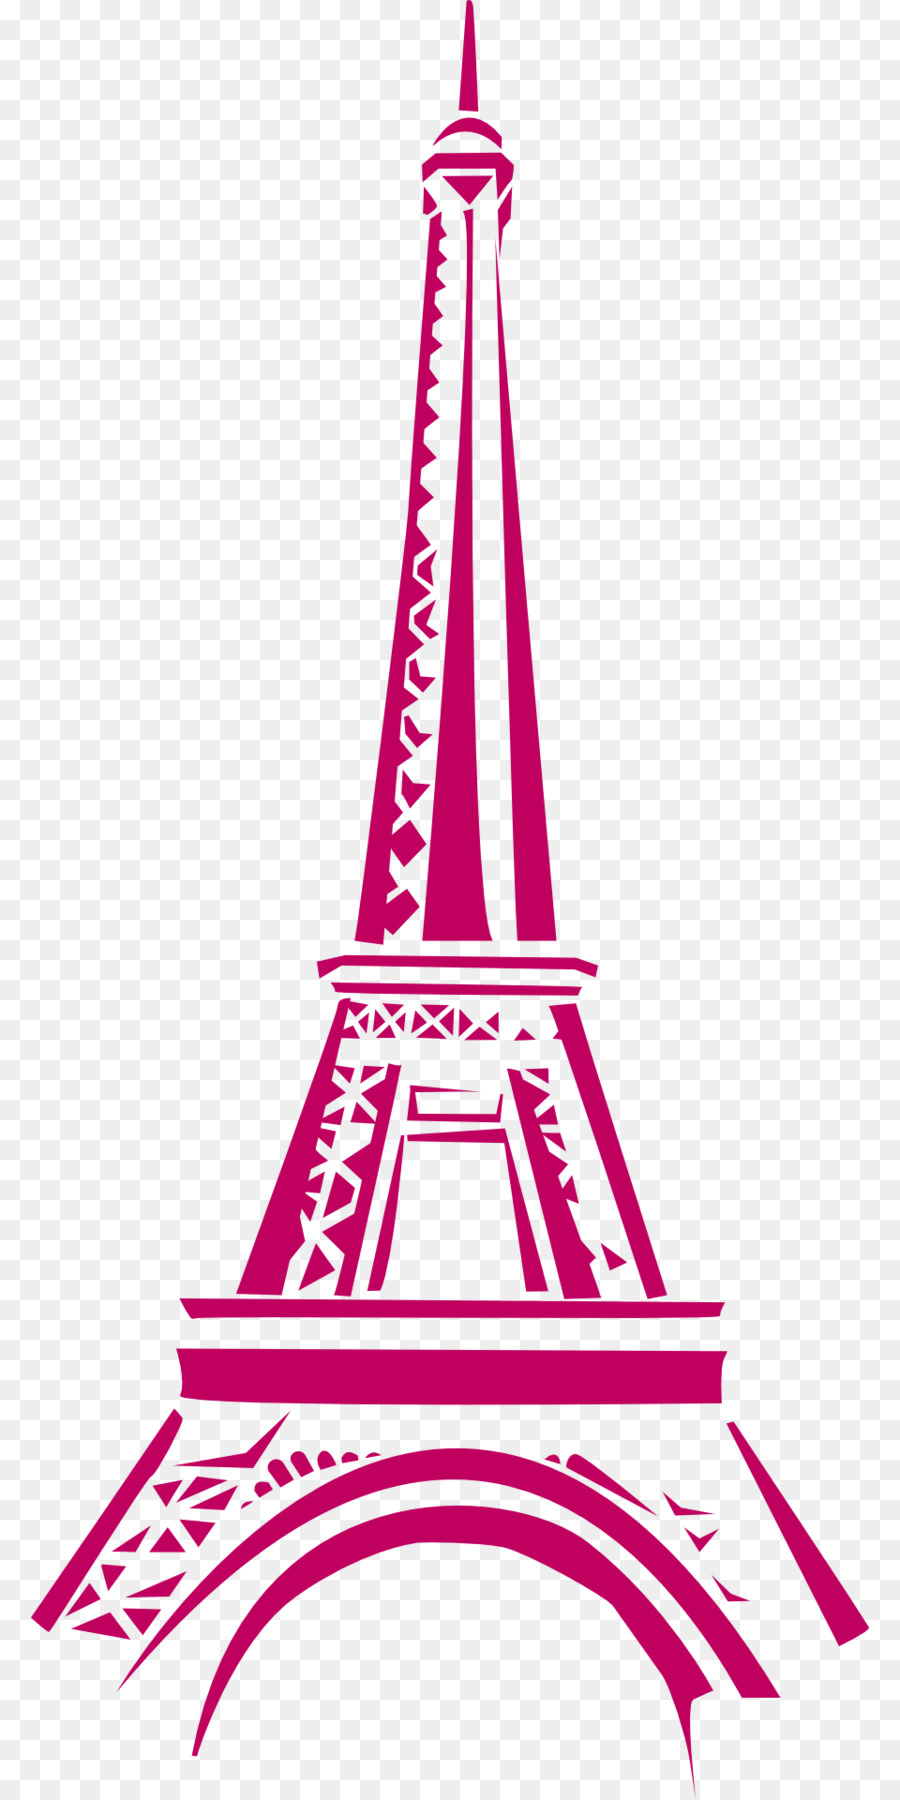 Eiffel Tower Clip art - Pink Eiffel Tower png download - 960*1920 - Free Transparent Eiffel Tower png Download.